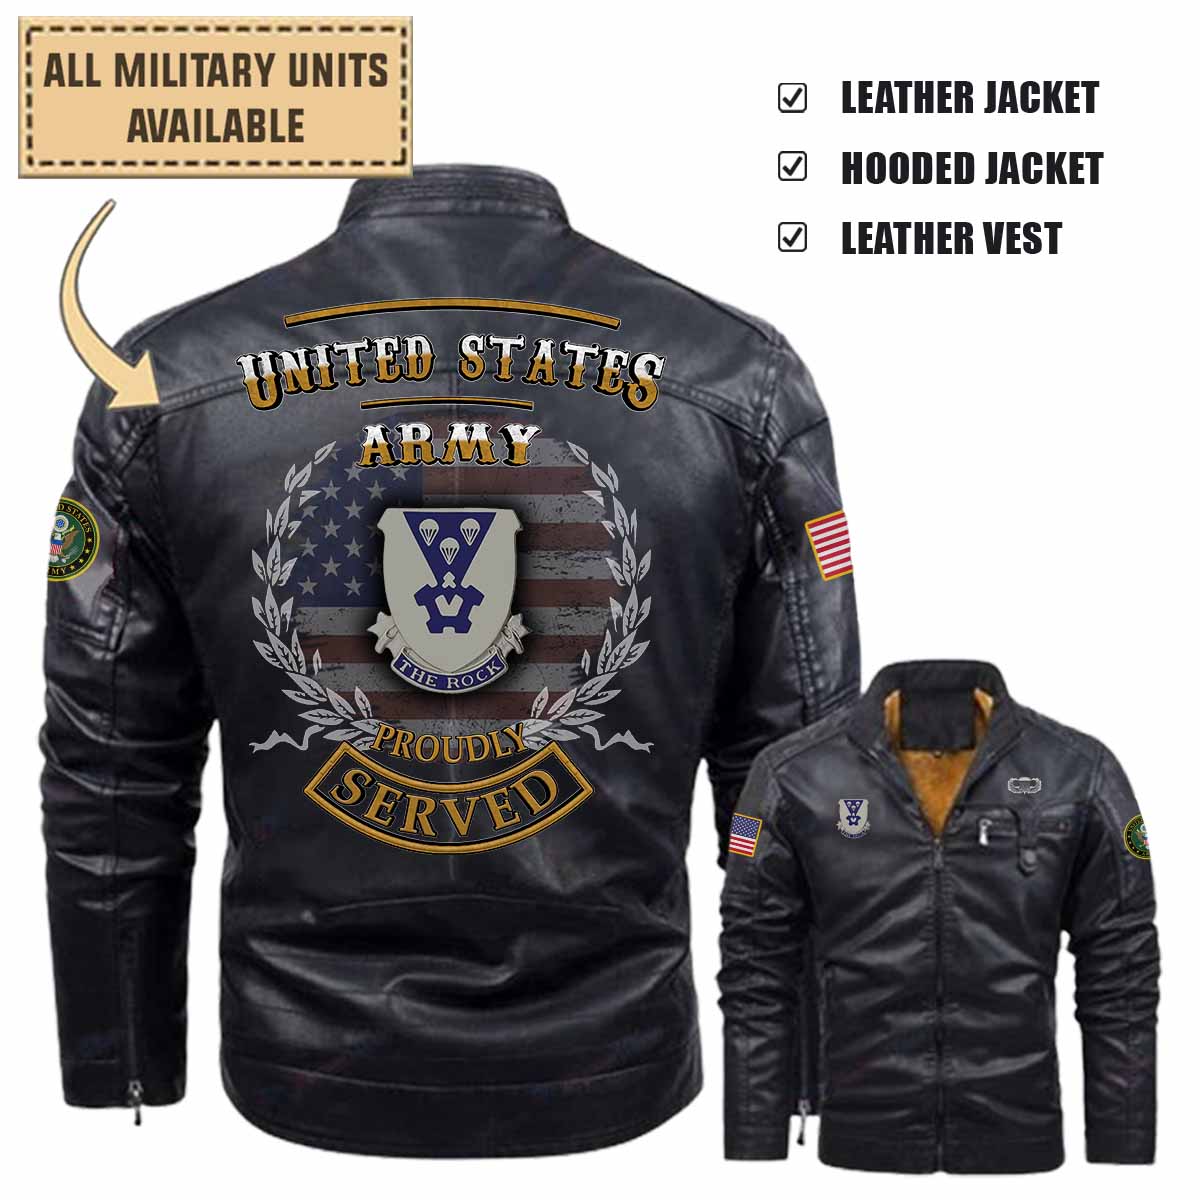 503rd pir 503rd parachute infantry regimentleather jacket and vest rfc9t